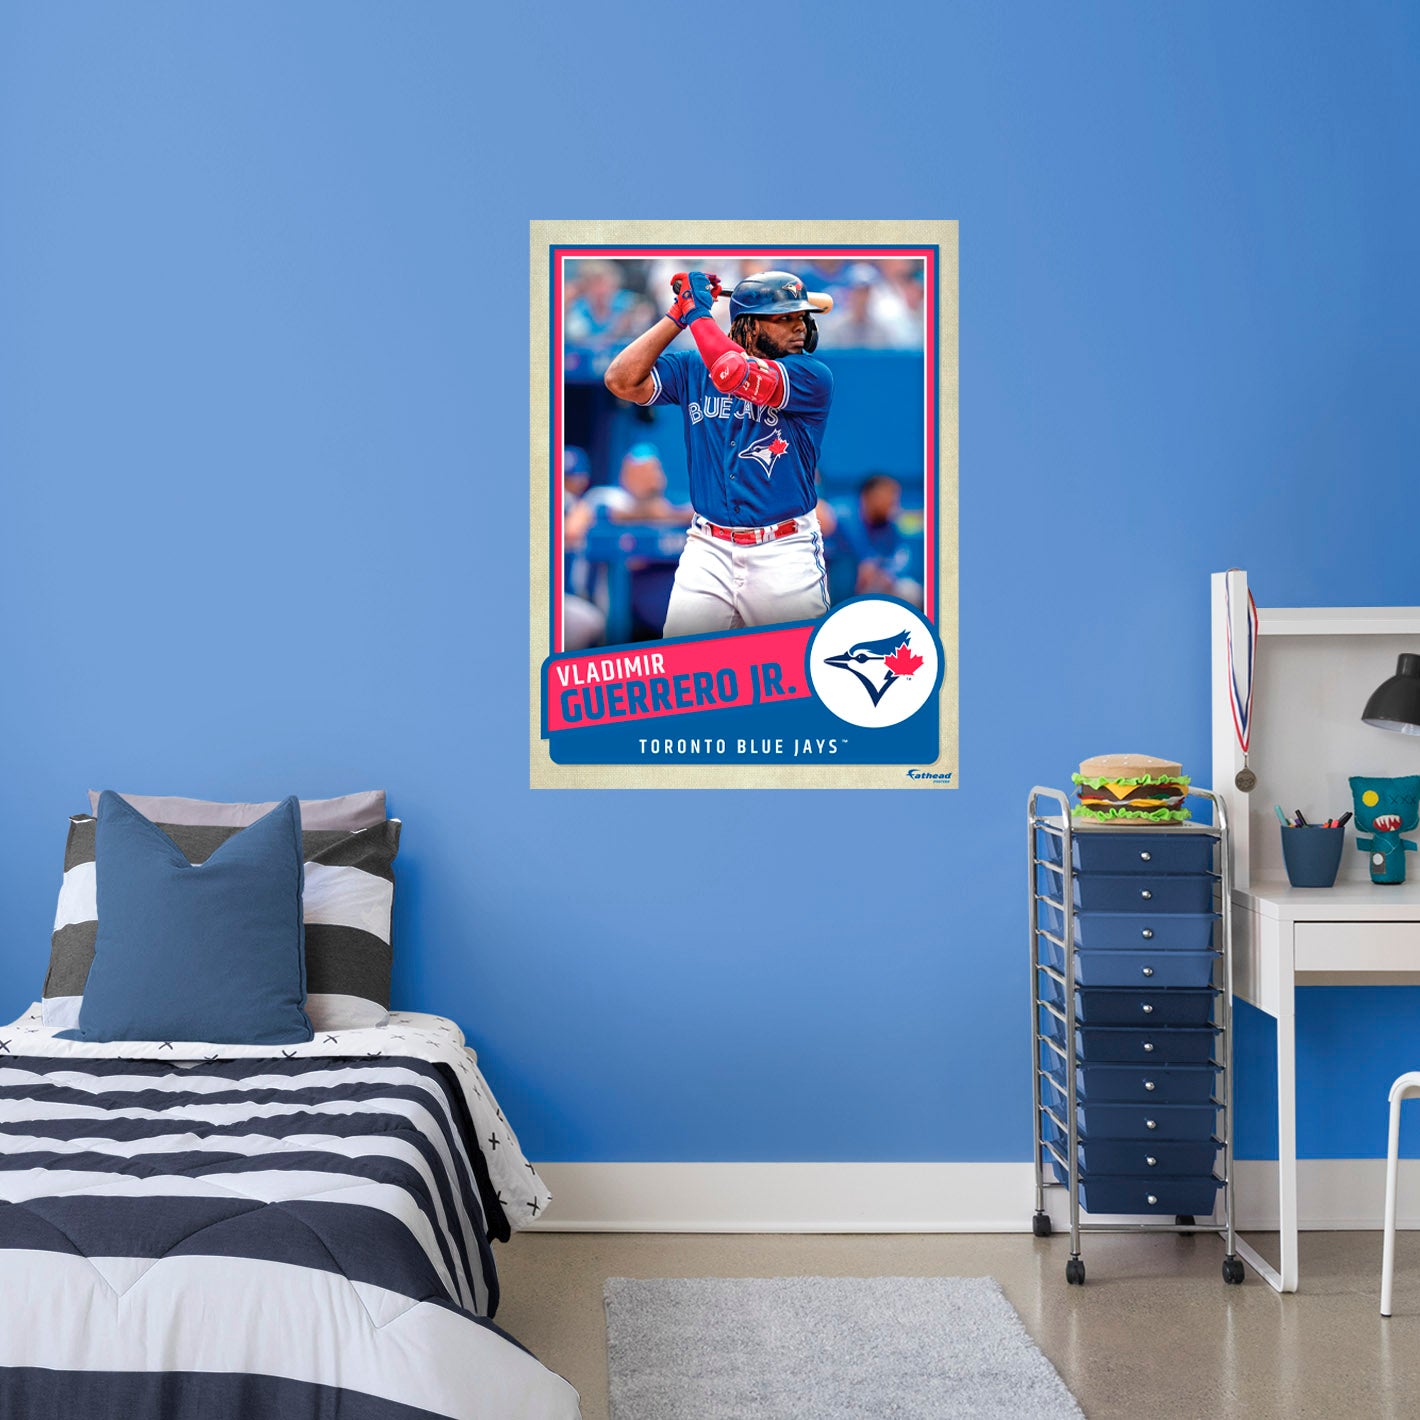  FNnemg Vladimir Guerrero Jr Poster Baseball World Legend Star  Posters Wall Art Painting Canvas Gift Living Room Prints Bedroom Decor  Poster Artworks 24x36inch(60x90cm): Posters & Prints